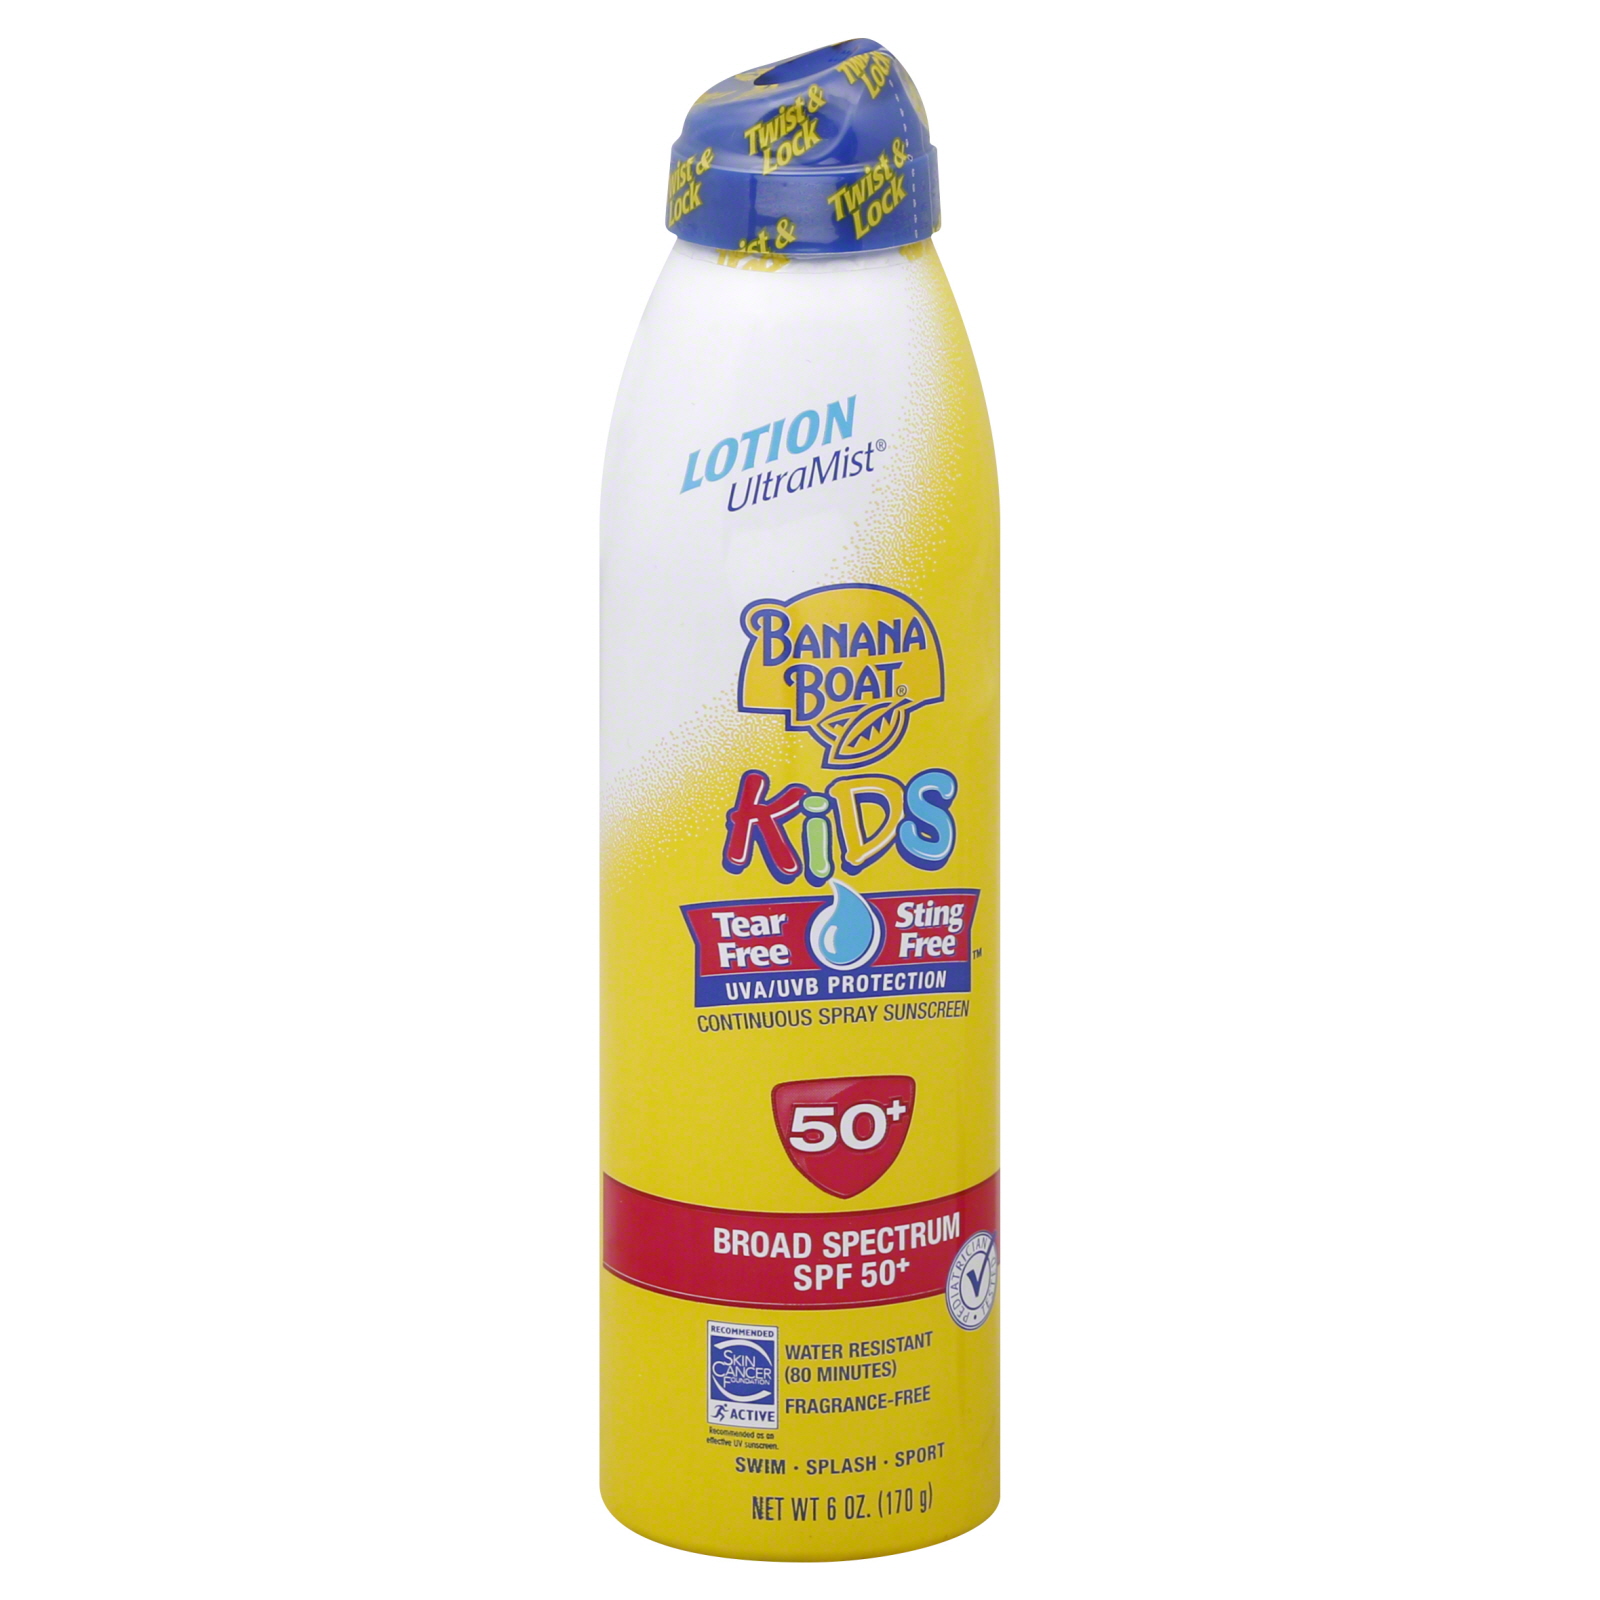 Banana Boat UltraMist Kids Sunscreen, Continuous Spray, Tear Free, Lotion, SPF 50, 6 oz (170 g)